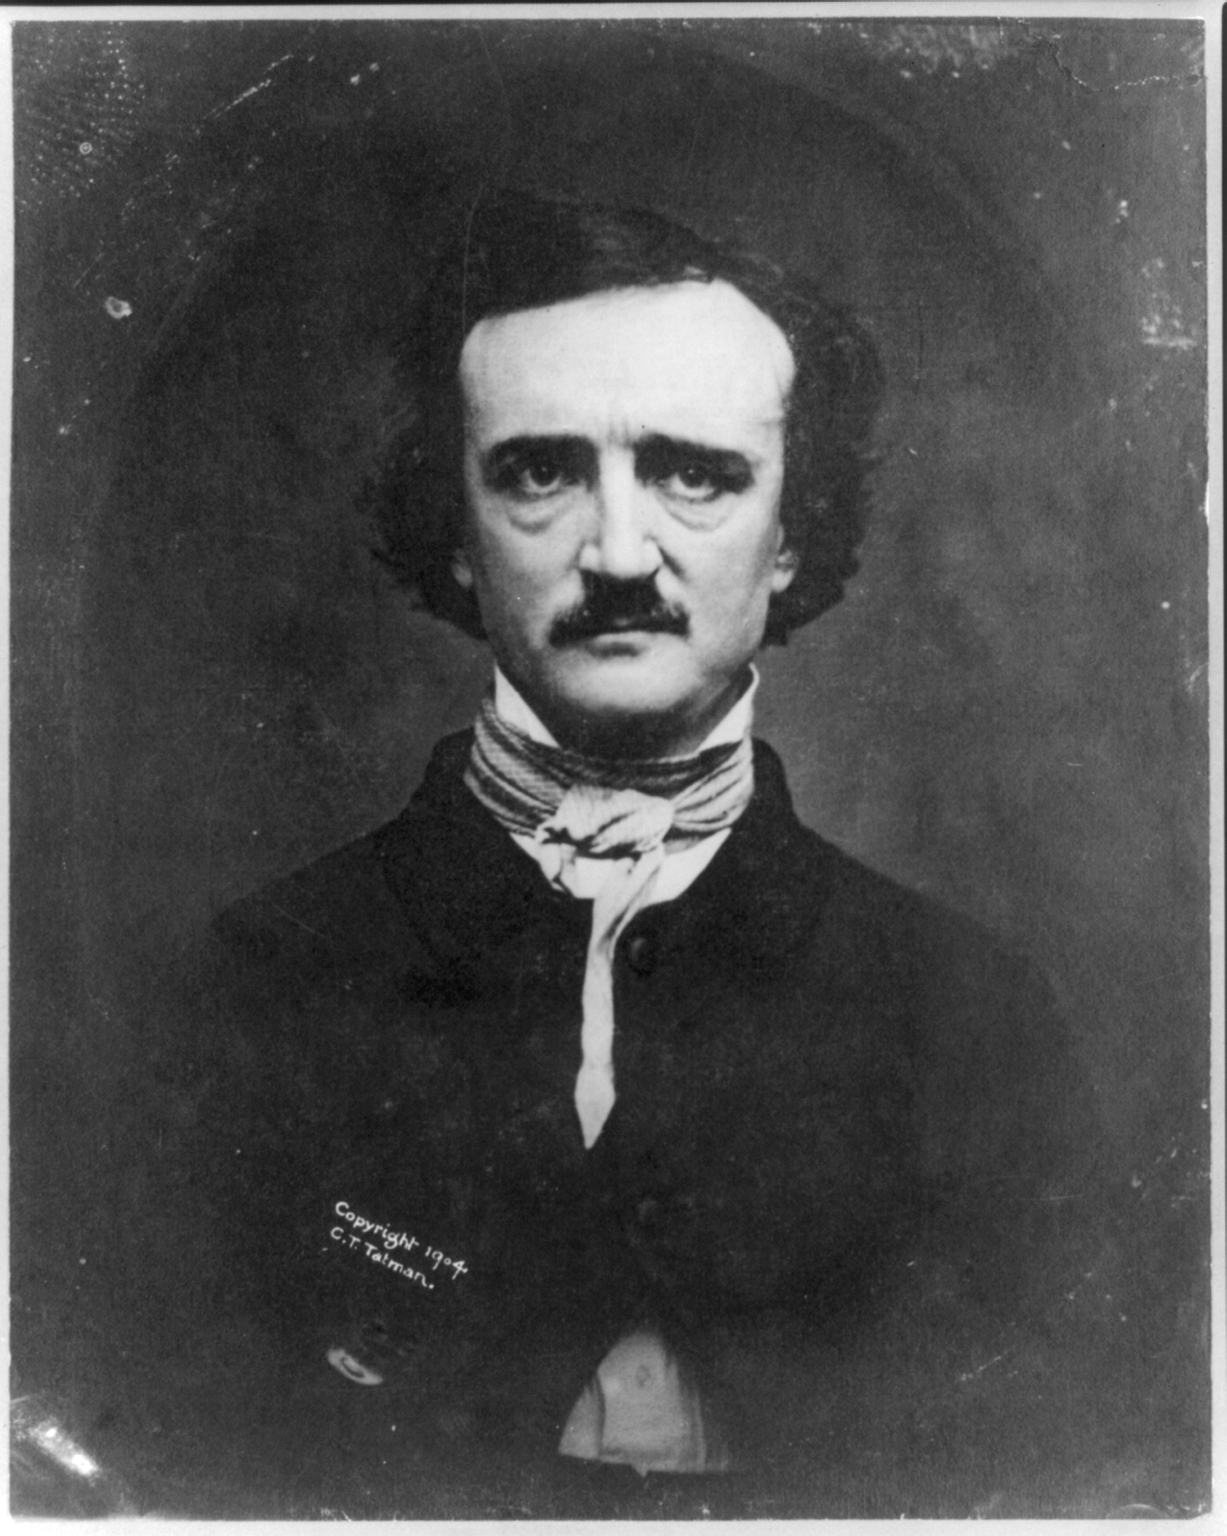 Edgar Allan Poe, 1809 - 1849